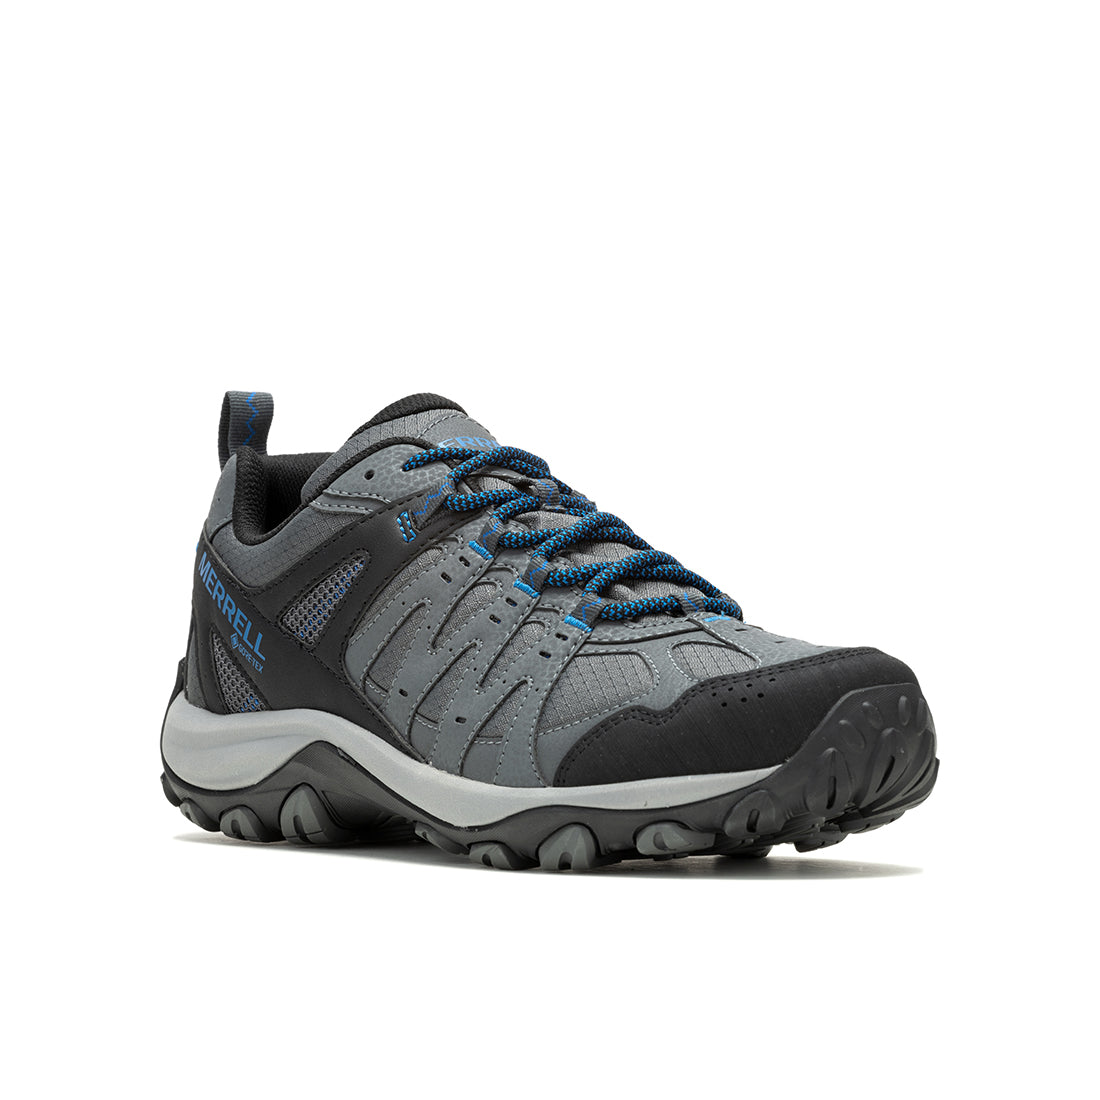 Accentor 3 Sport Gtx - Rock/Blue Mens Hiking Shoes - 0